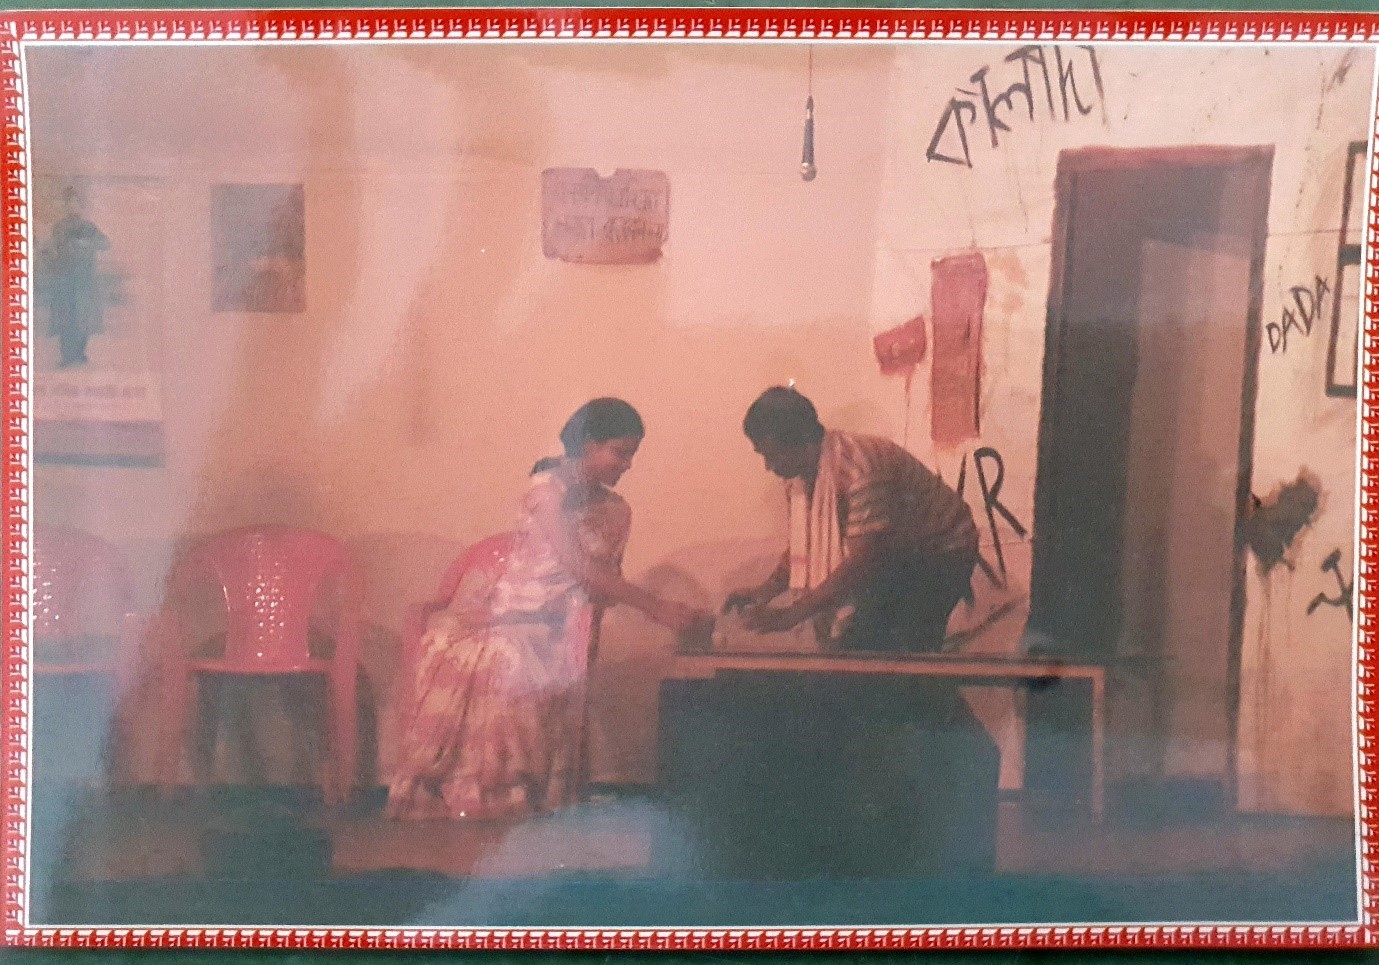  Bengali Cultural Program Mumbai